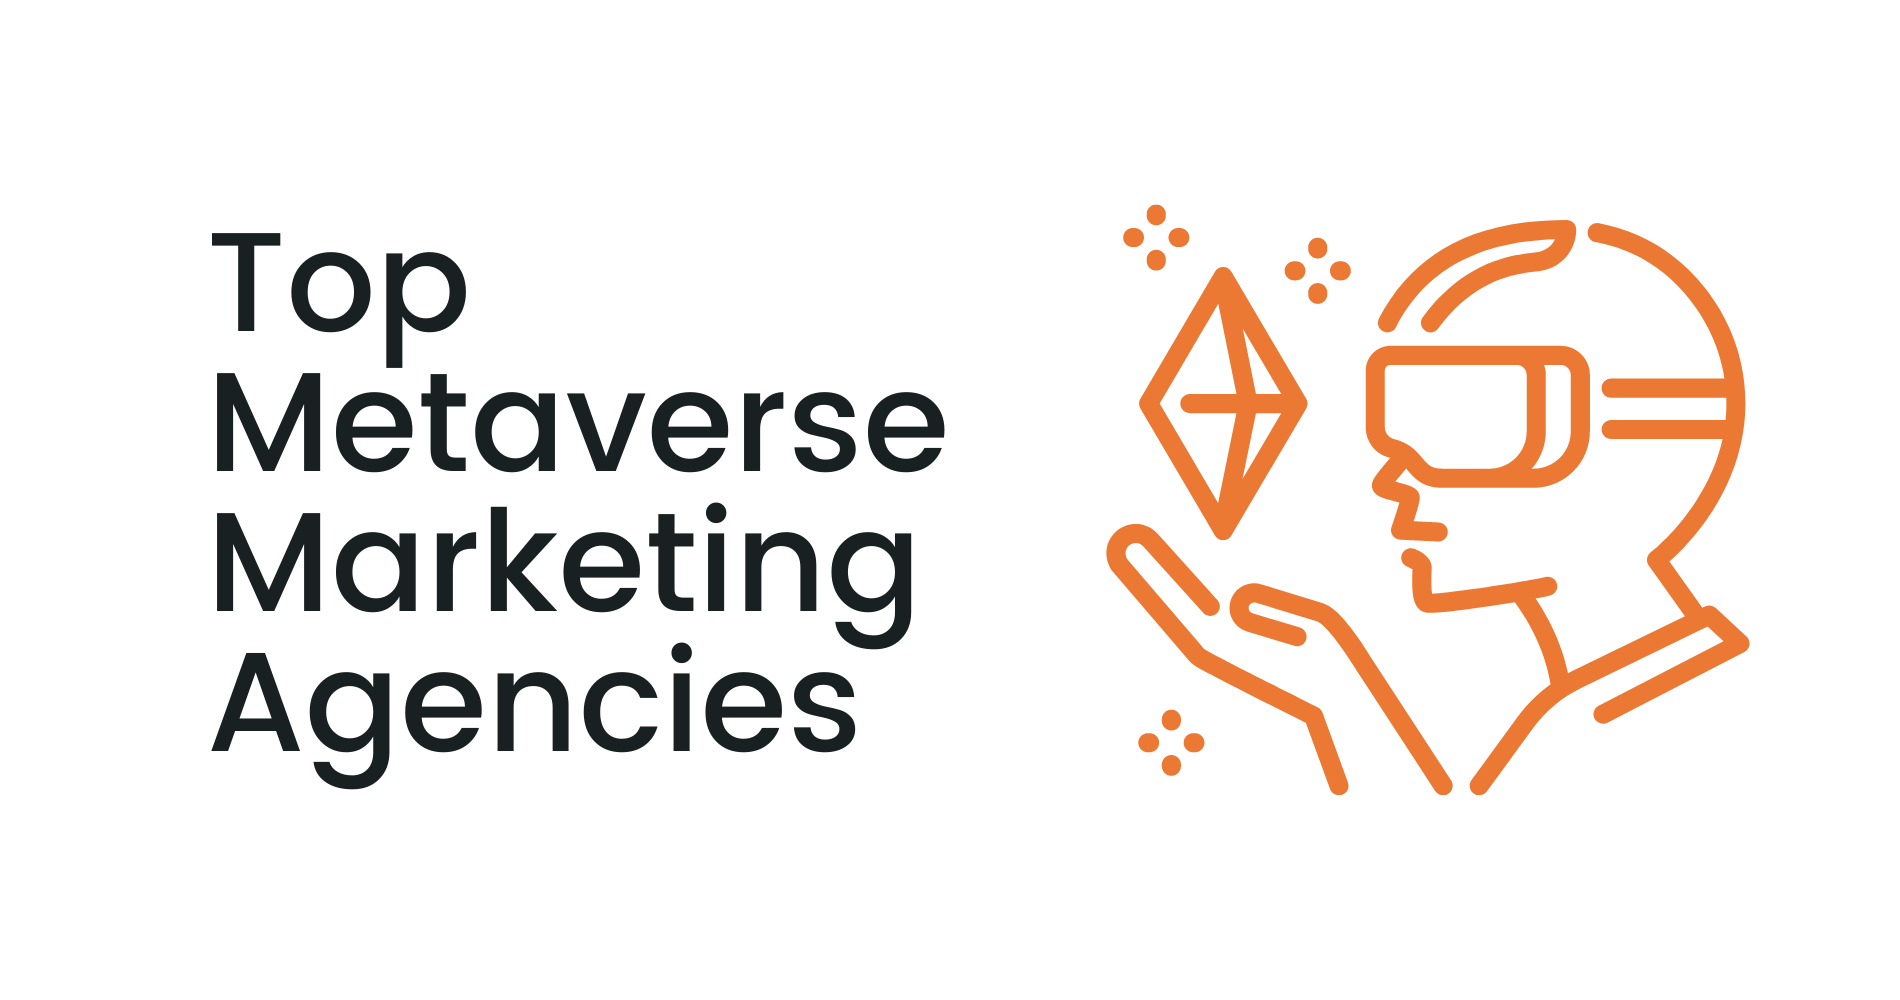 Top Metaverse Marketing Agencies